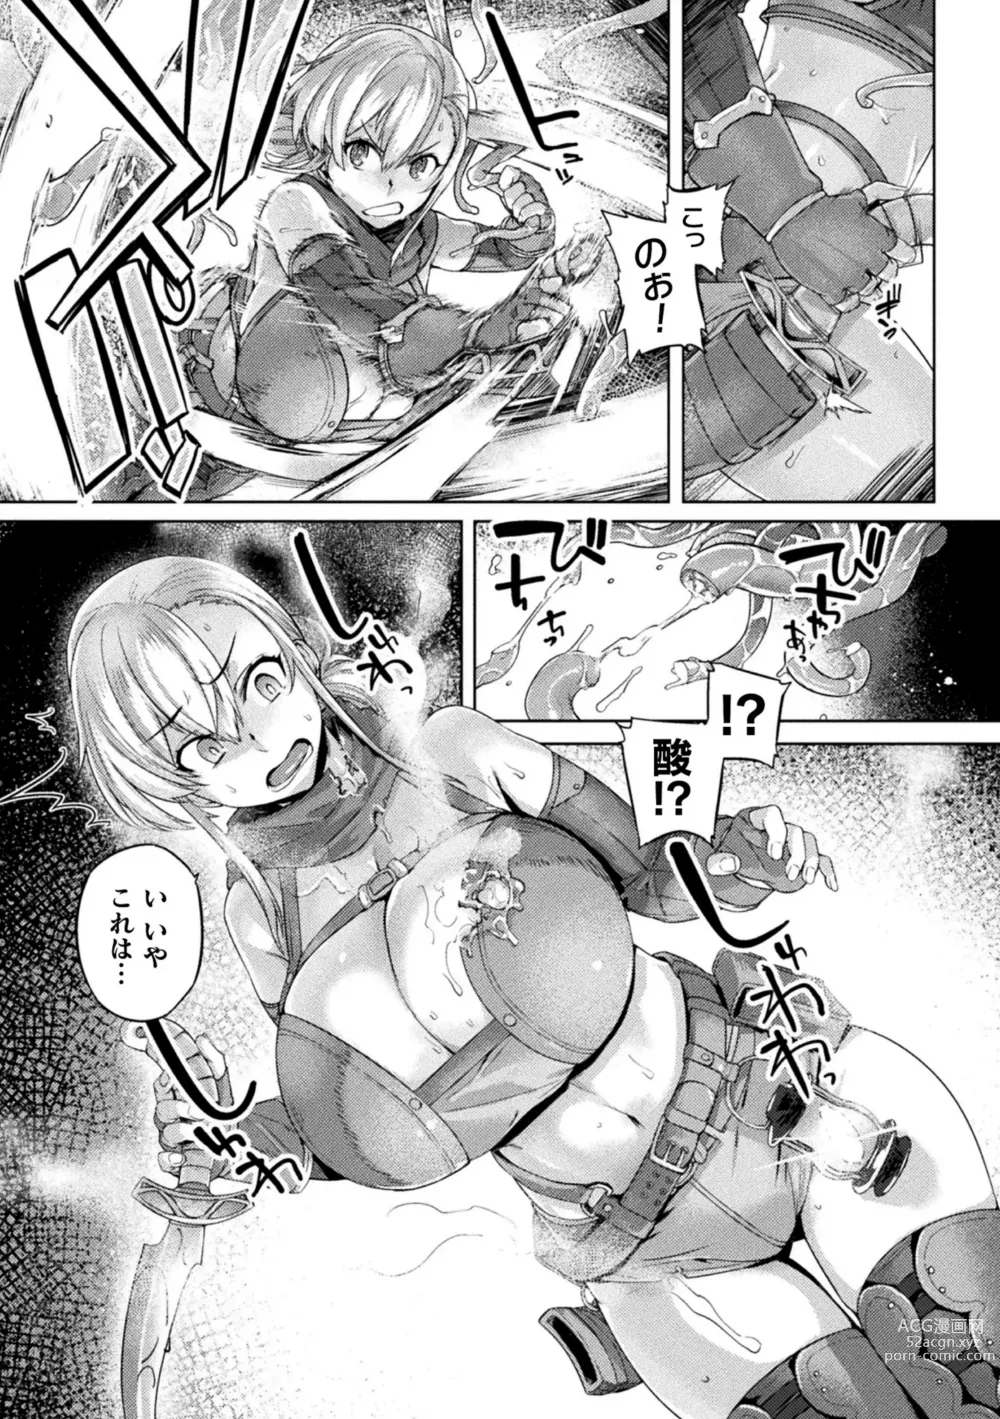 Page 9 of manga Kusshita Otome ga Ochiru Koro - When a surrendered maiden becomes sexually degraded